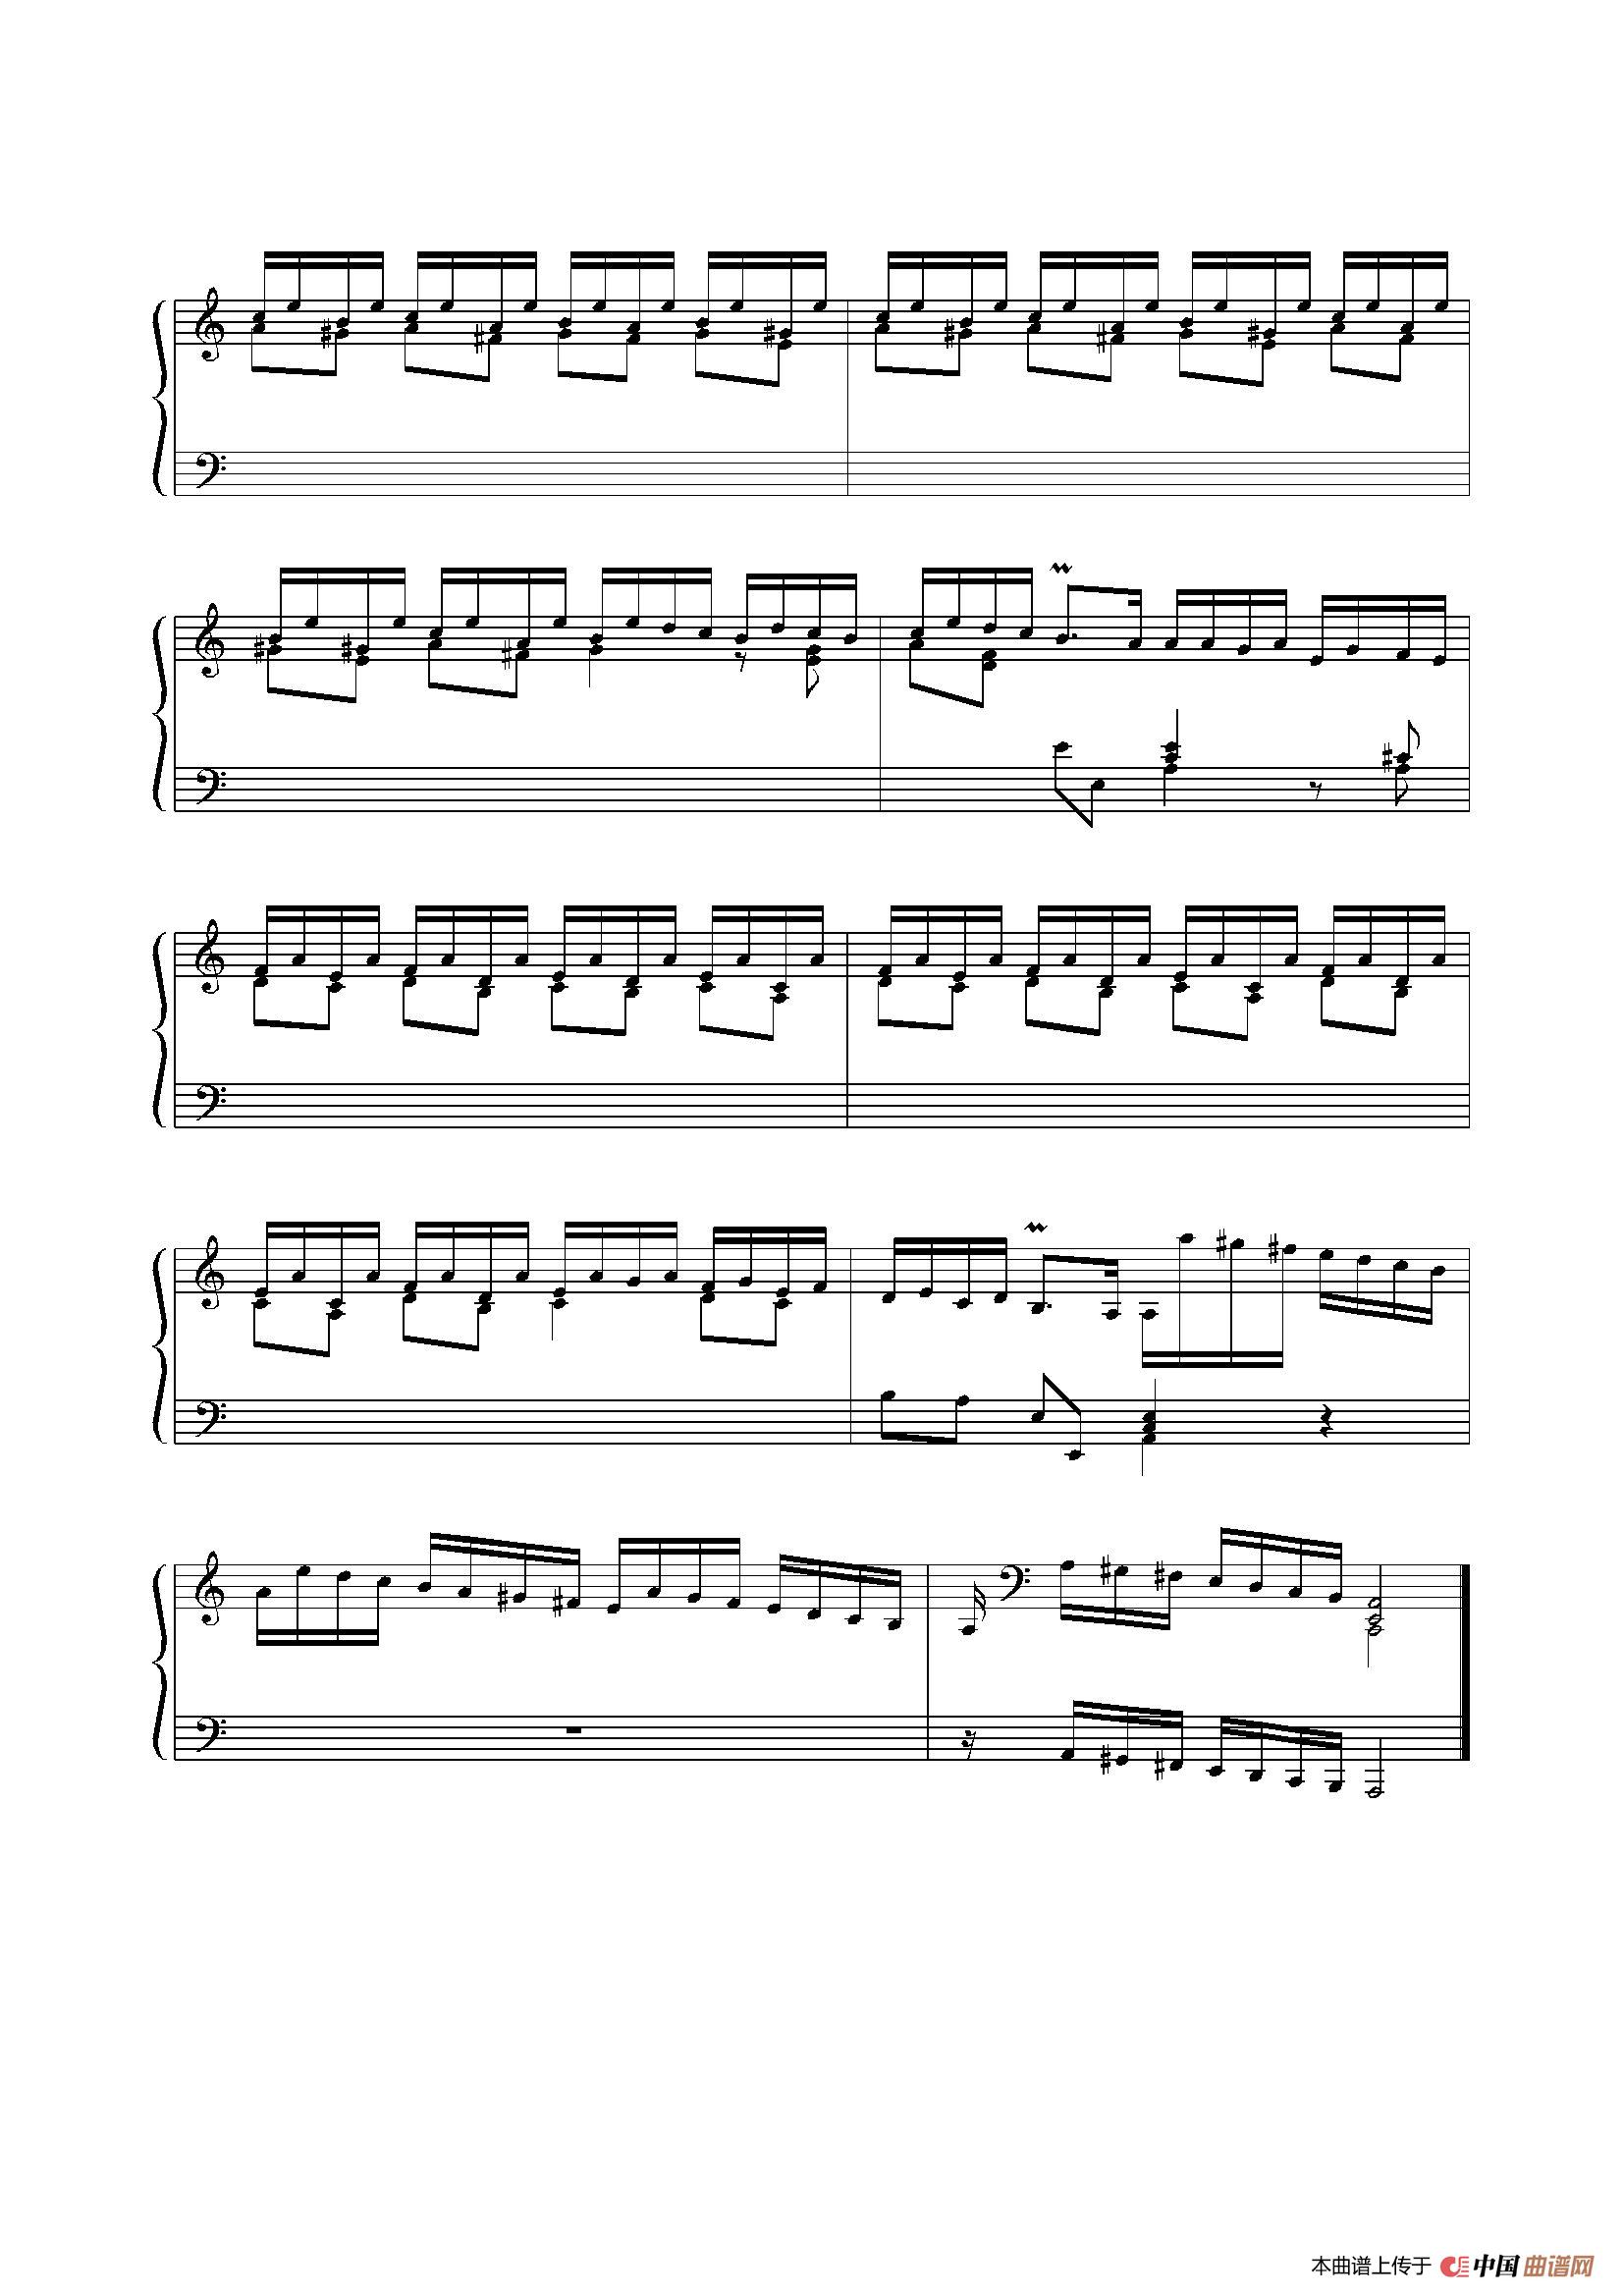 《AmPrelude》钢琴曲谱图分享